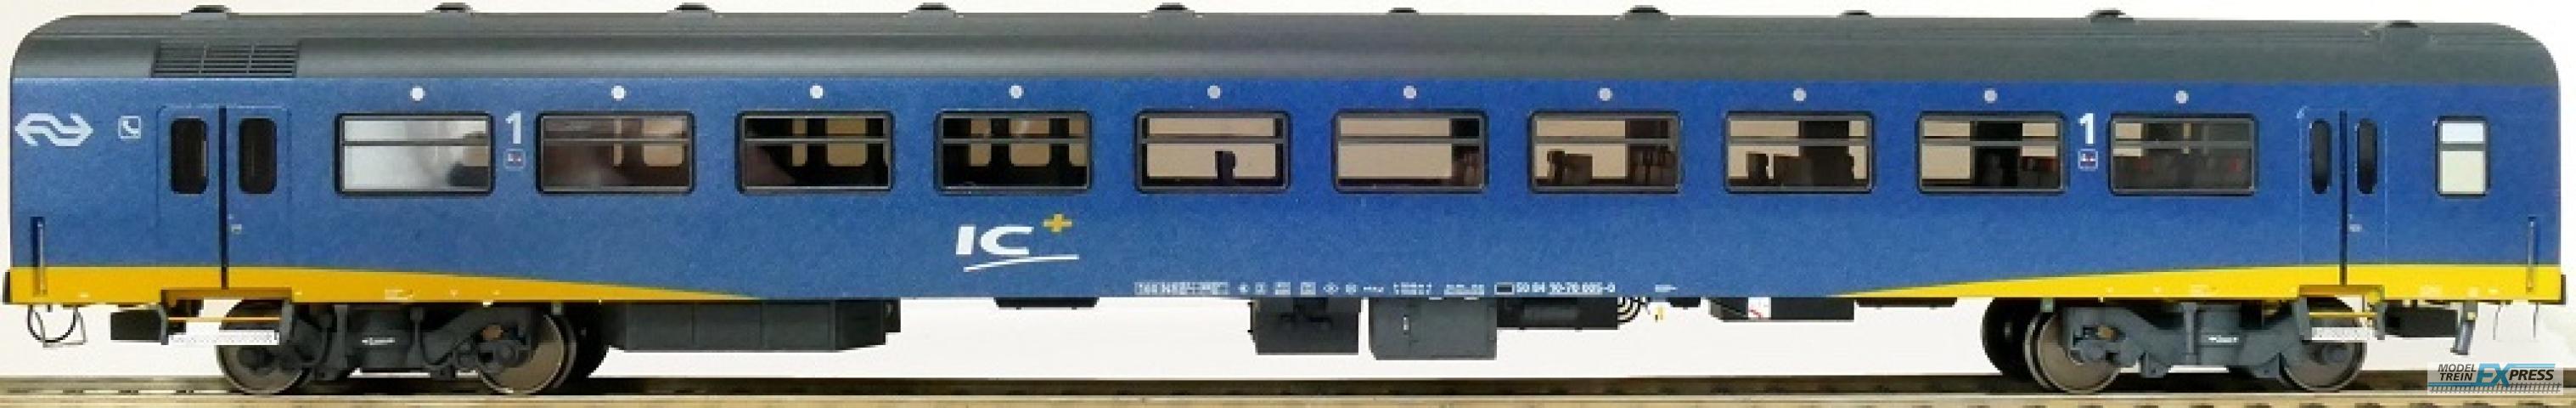 Exact-train 11124 NS ICR Plus Reisezugwagen A ( Farbe Blau), Ep. IV